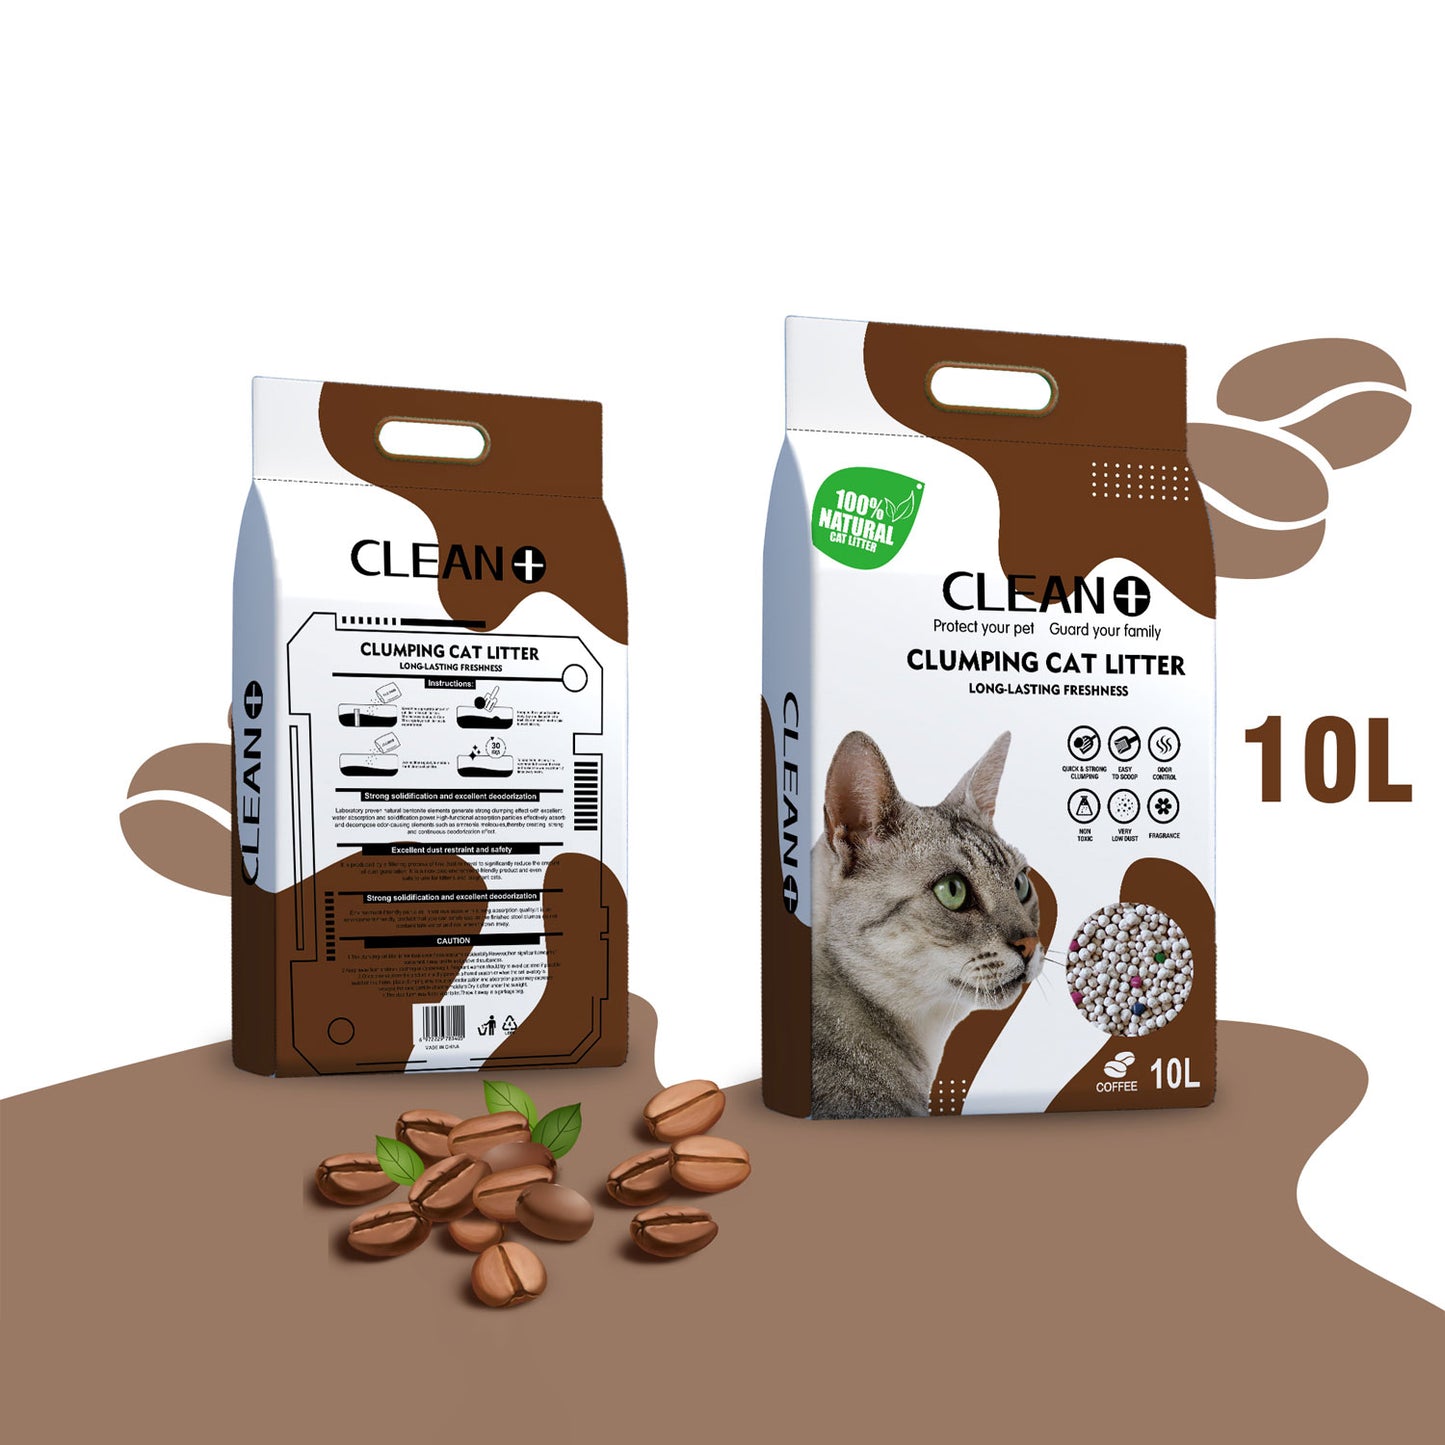 Clean + : Clumping Cat Litter : 10L : Coffee